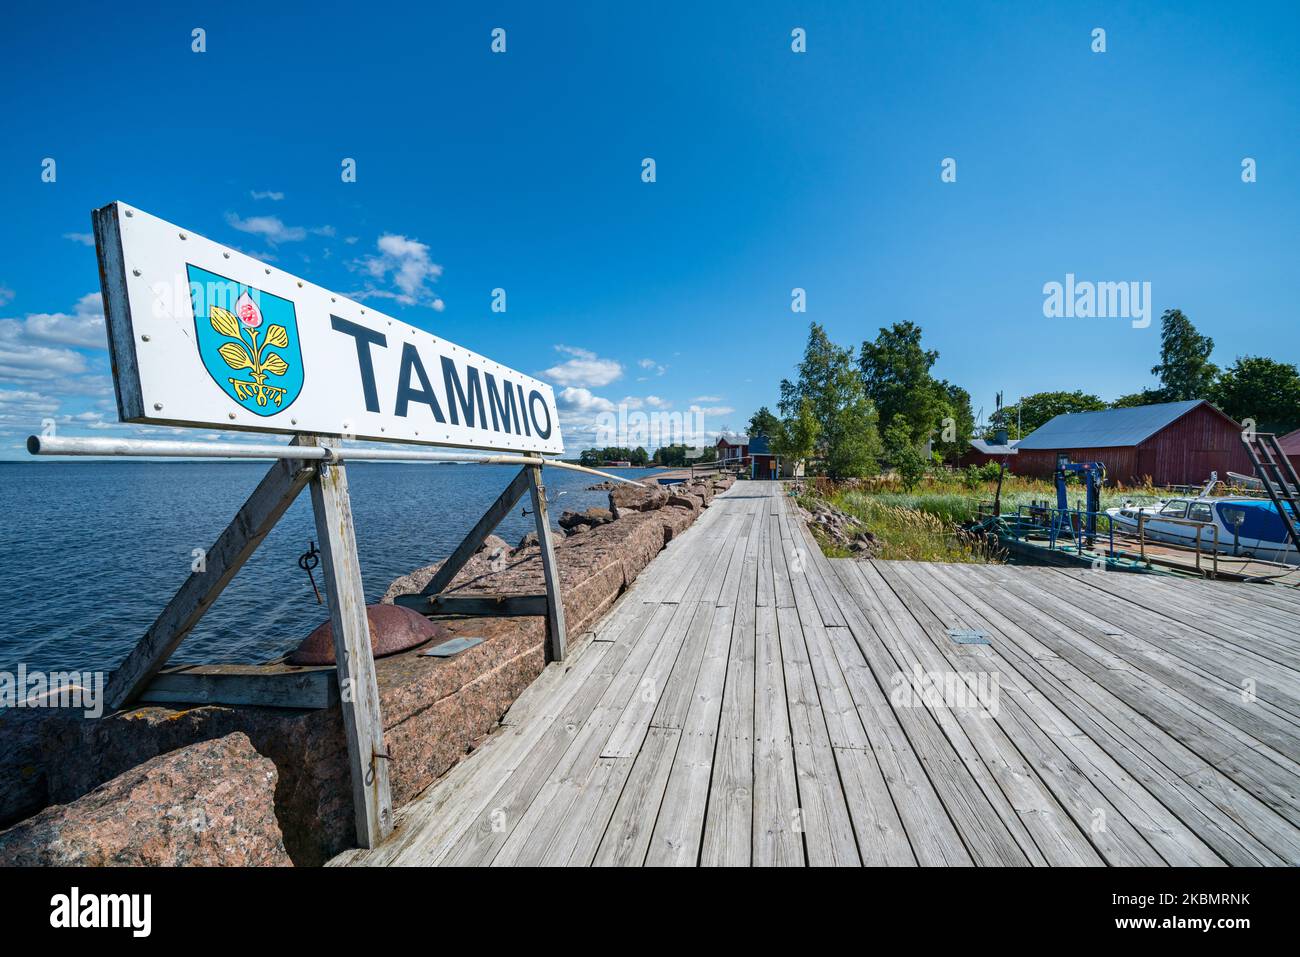 Muelle del puerto en la isla Tammio, Hamina, Finlandia Foto de stock